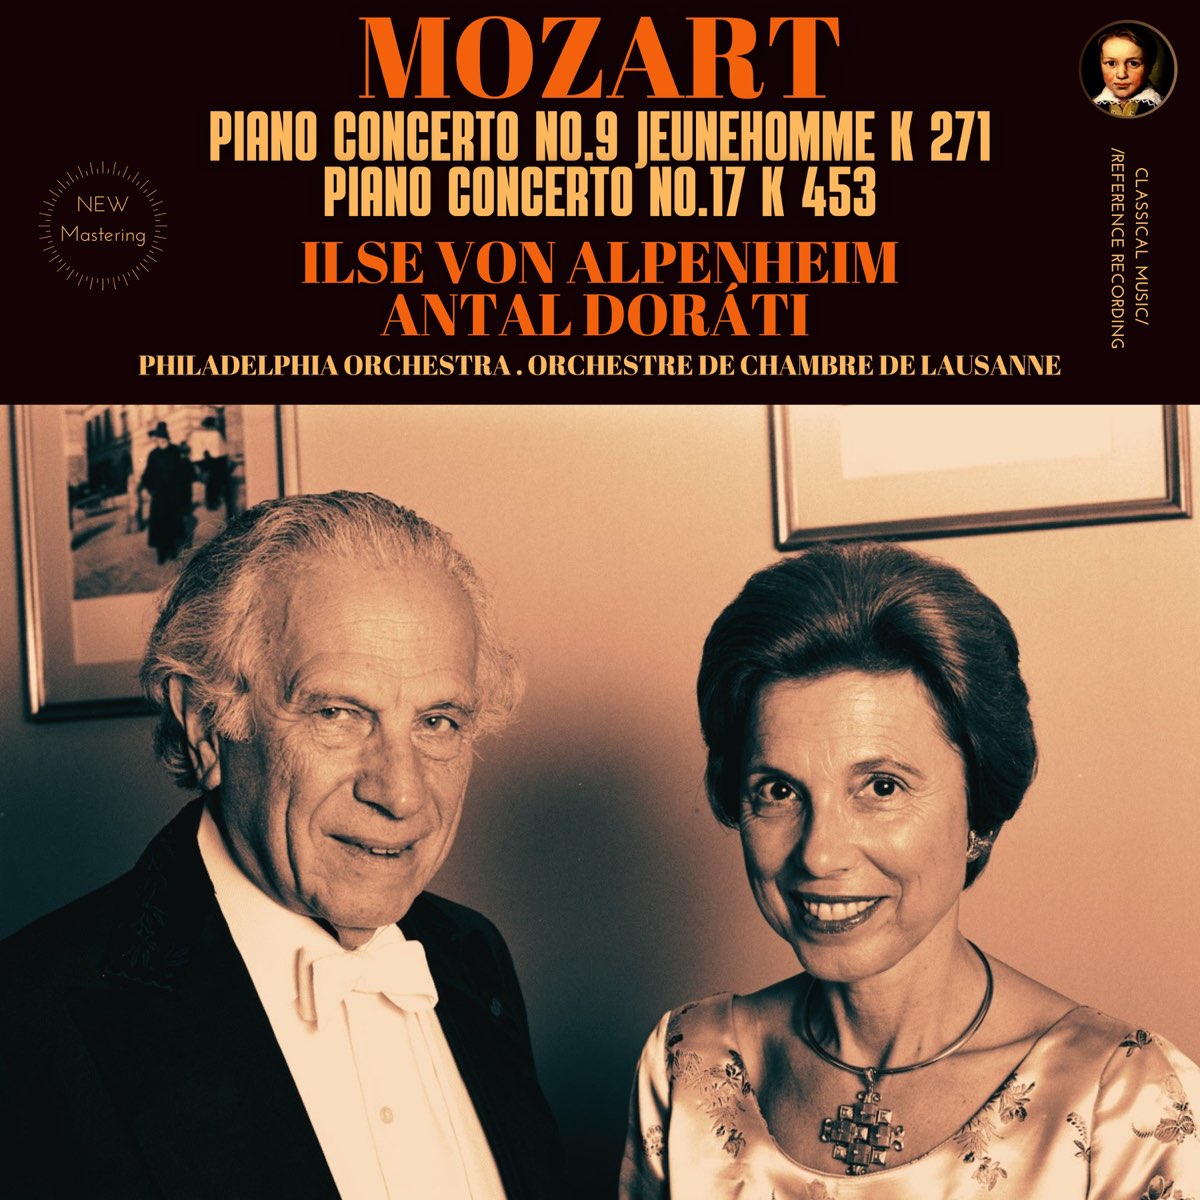 Mozart: Piano Concerto K. 271 "Jeunhomme" & K. 453 by Ilse von Alpenheim -  Album by Ilse von Alpenheim, Antal Doráti & The Philadelphia Orchestra -  Apple Music